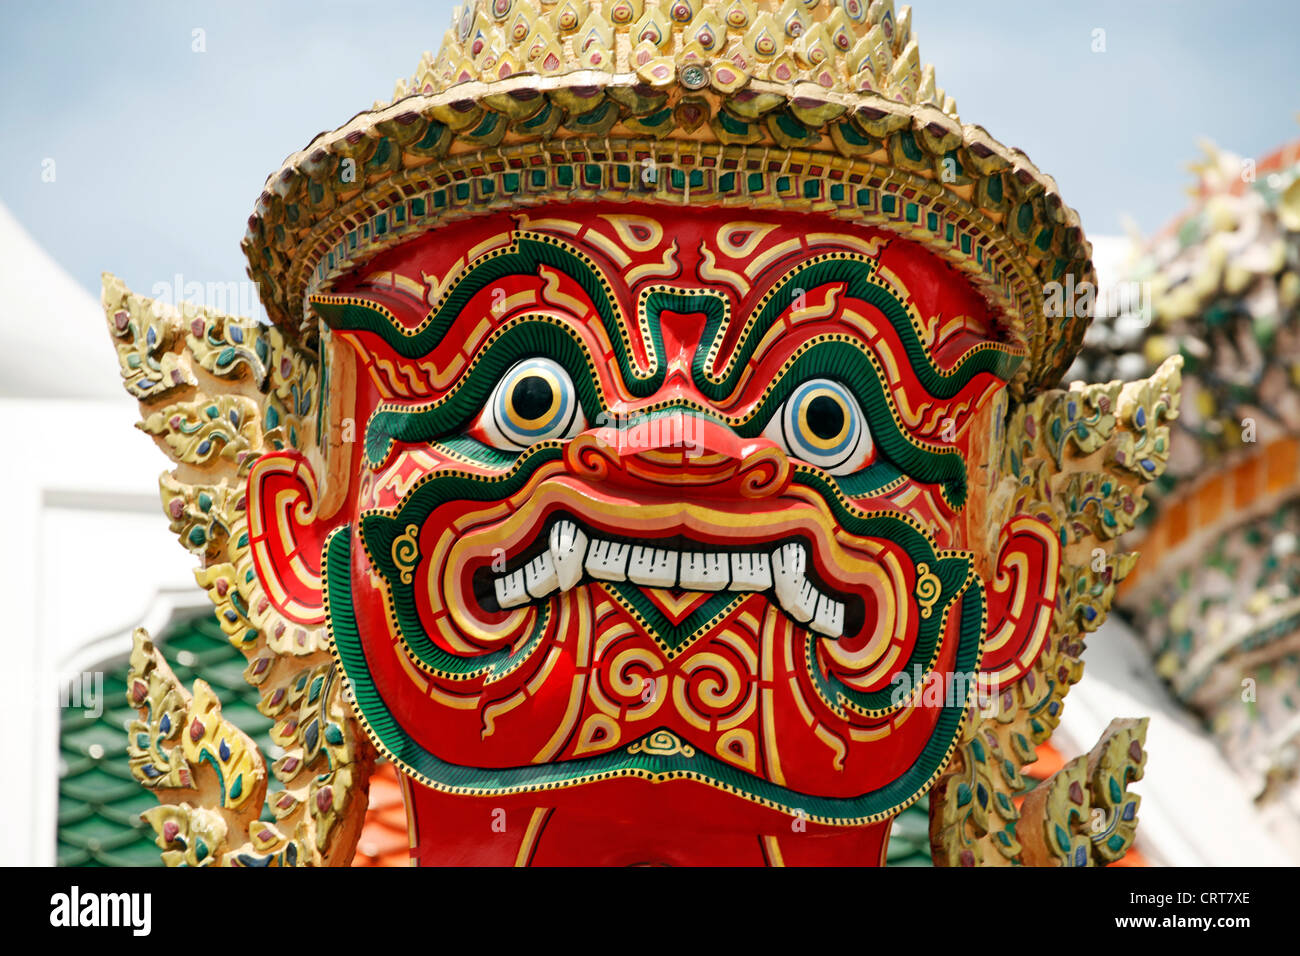 Temple Guardian Giant Suriyaphob with ugly, grotesque mask at the Grand Palace Complex, Wat Phra Kaew, Bangkok, Thailand. Stock Photo